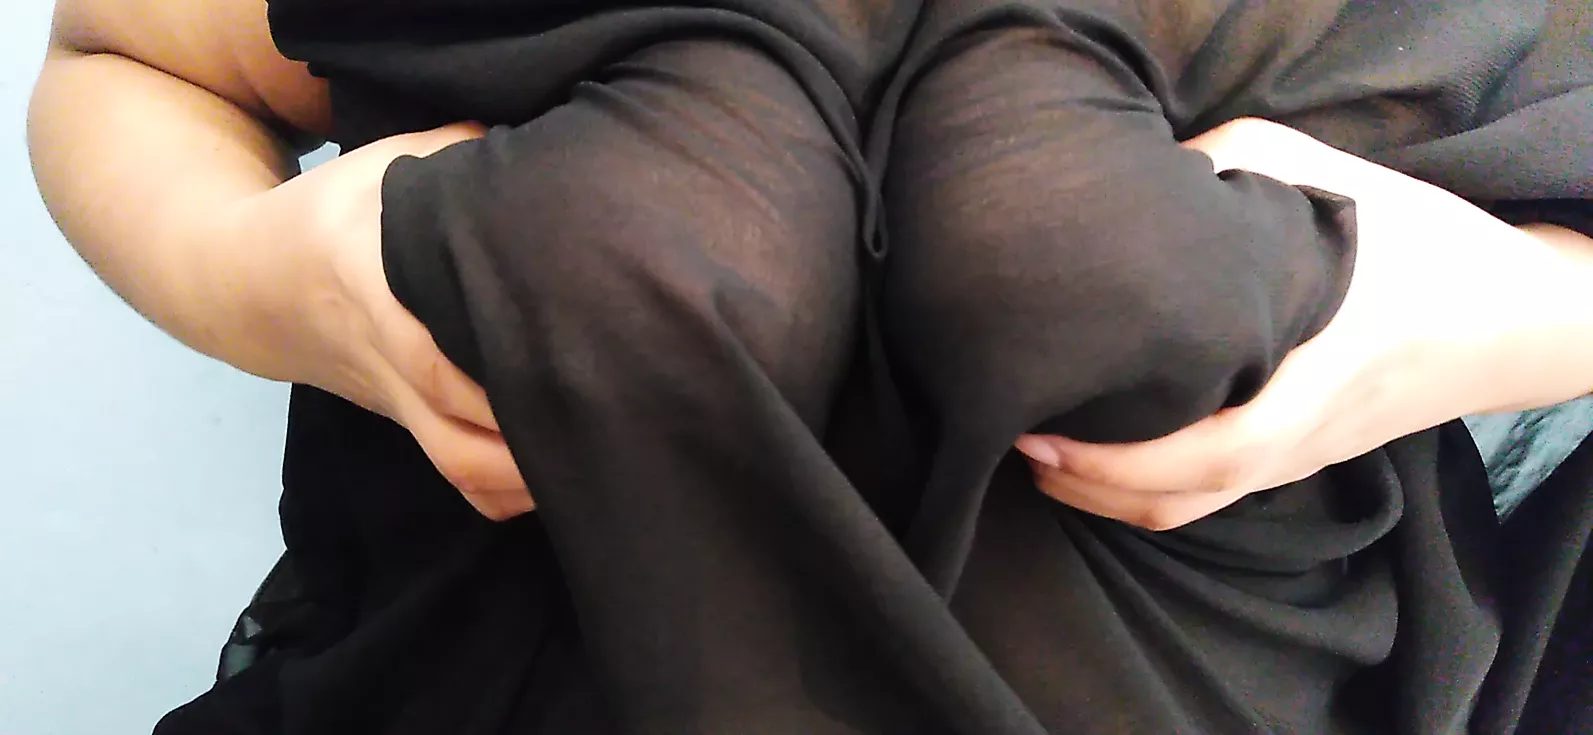 Vidéo dune femme au foyer arabe nue